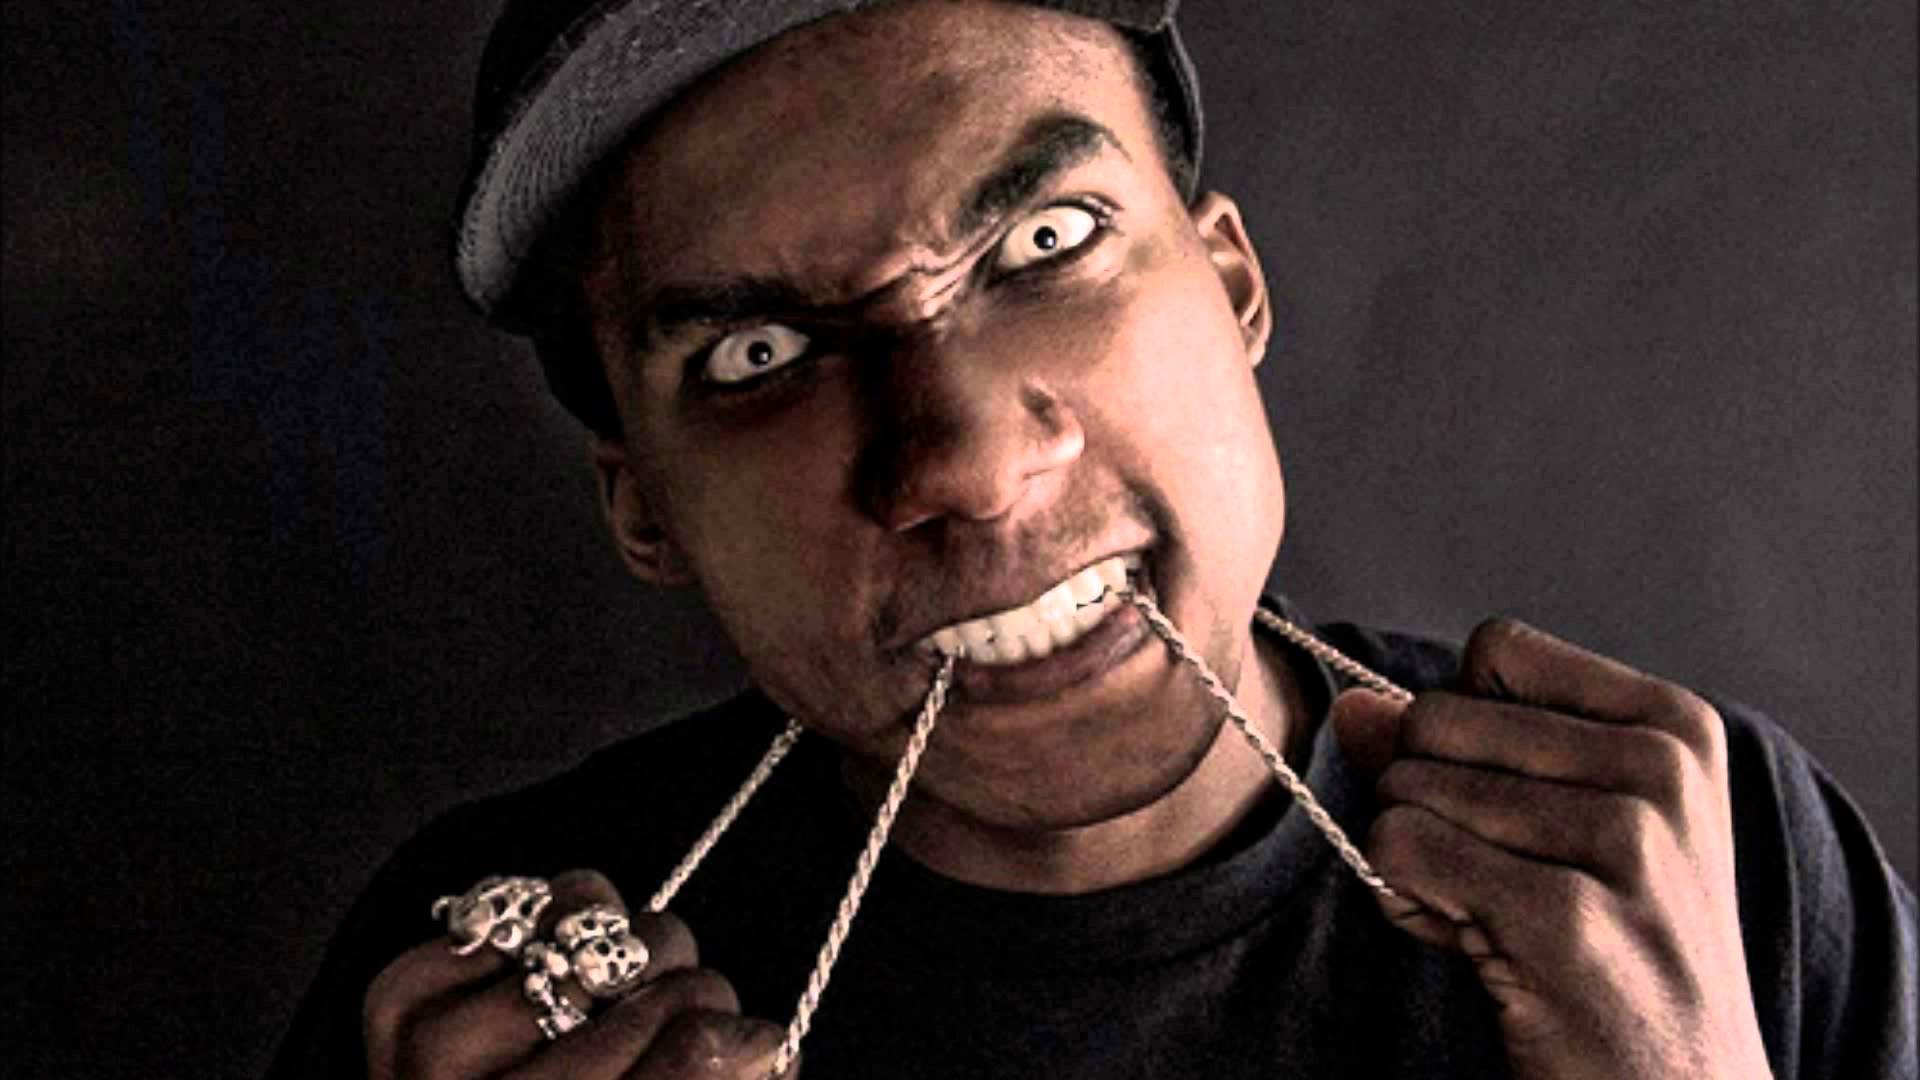 Funk Volume challenges all labels to rap battle for $500k